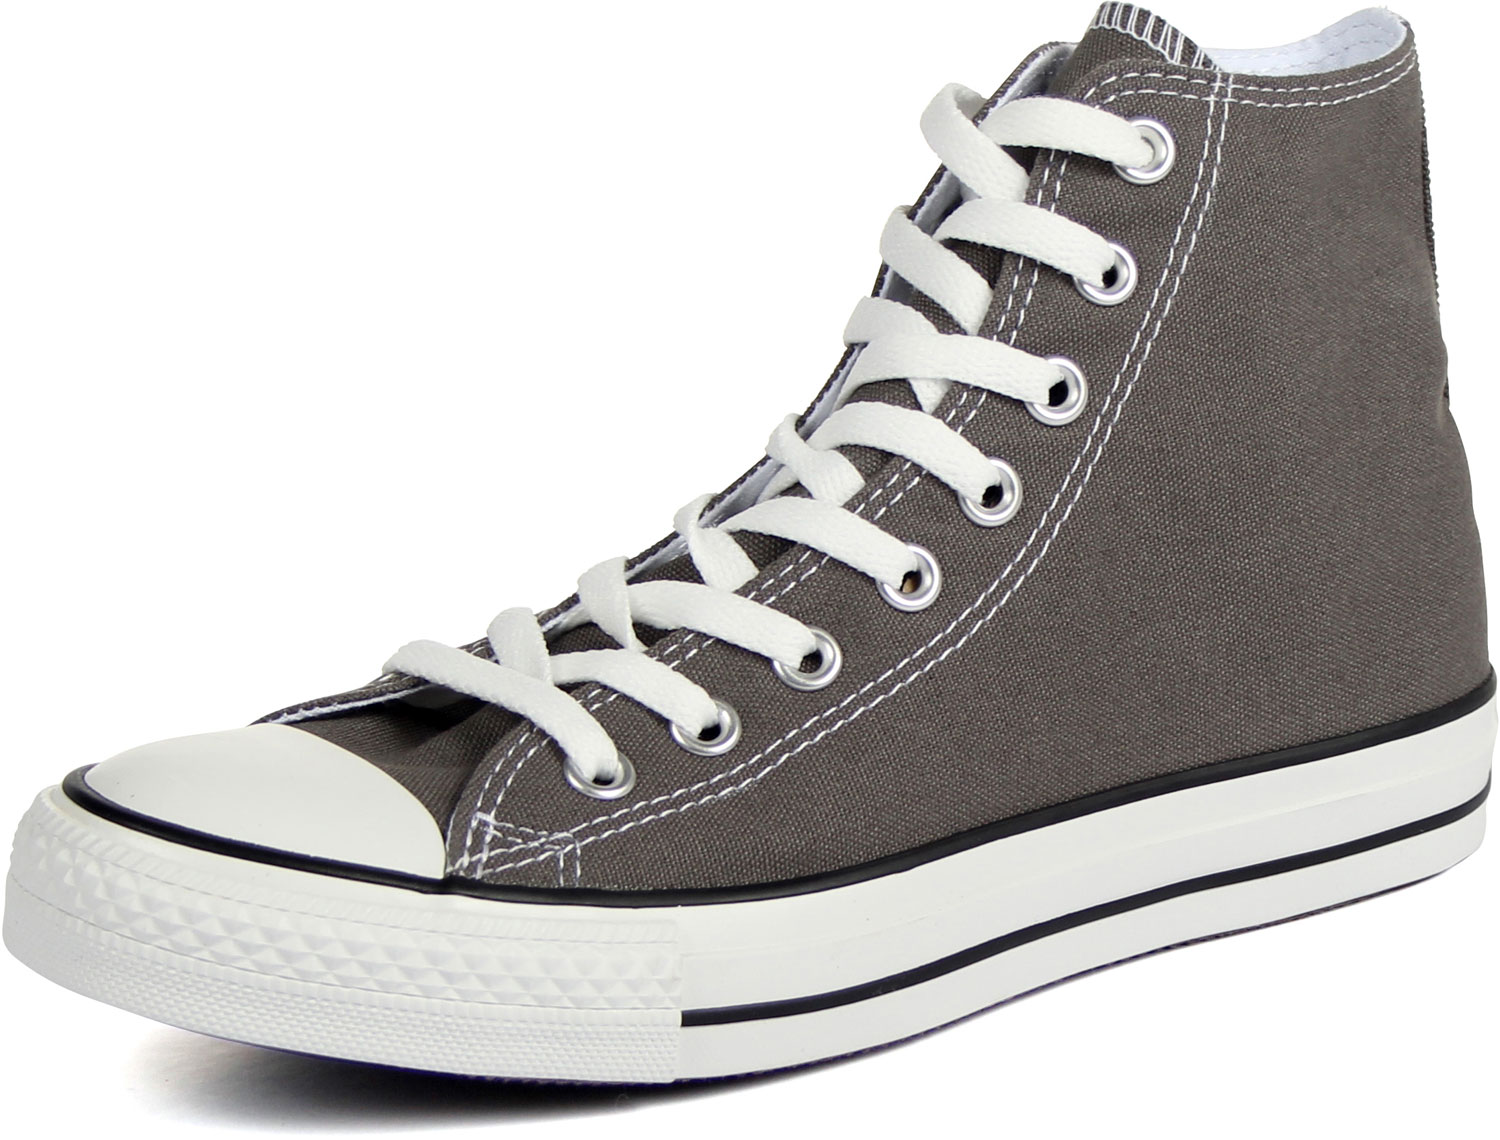 Converse Chuck Taylor All Star Shoes (1J793) Hi Top in Charcoal الراجحي الرصيد الغير متاح